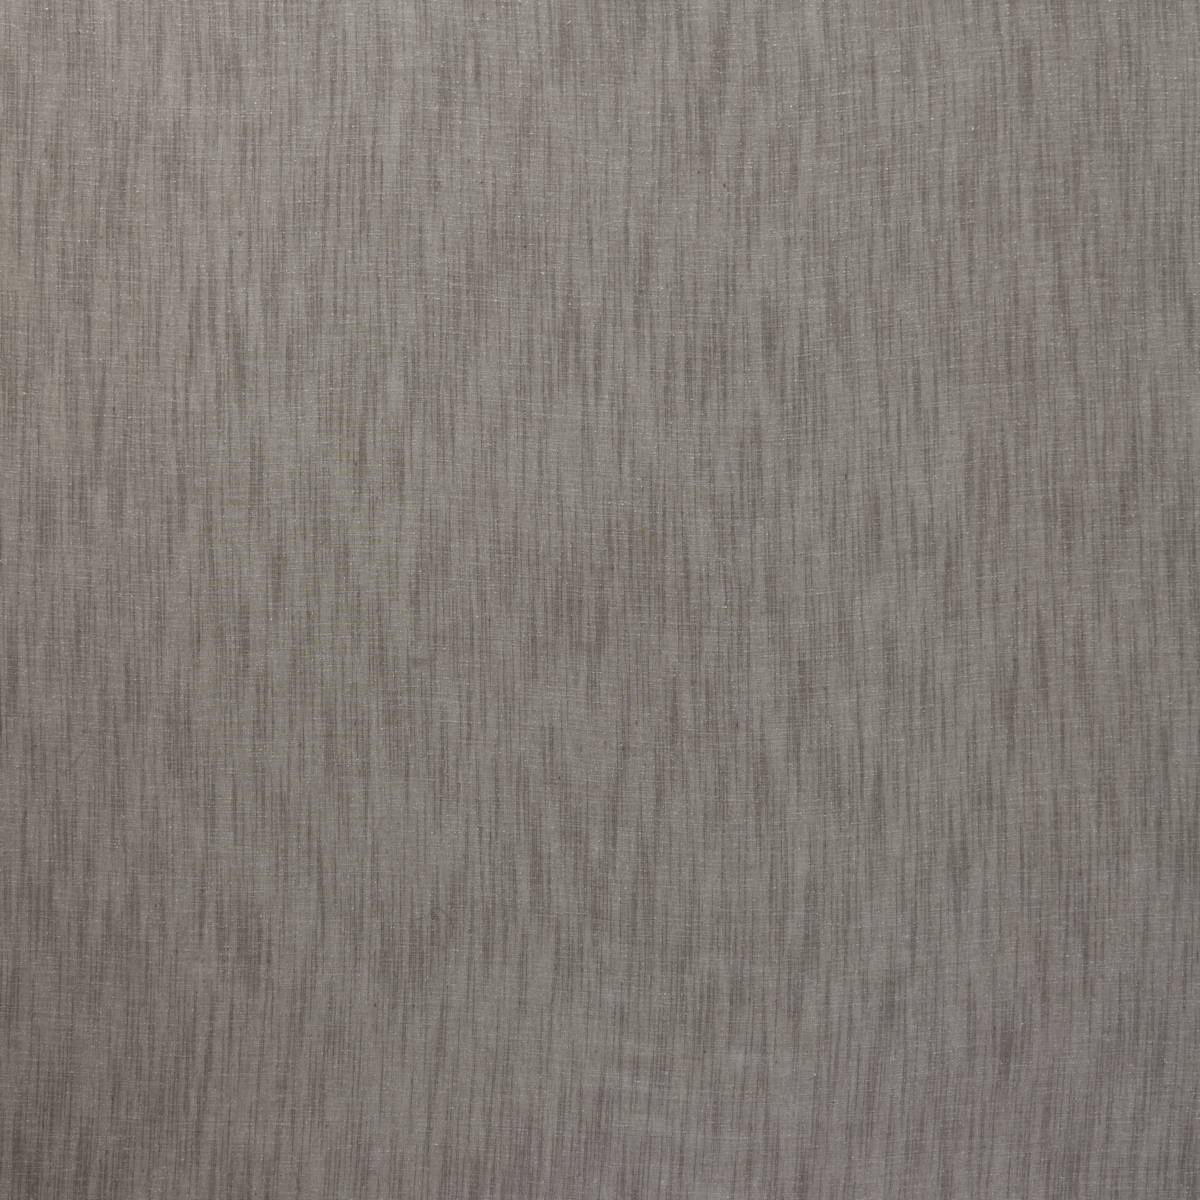 Carvallo Slate Fabric by iLiv